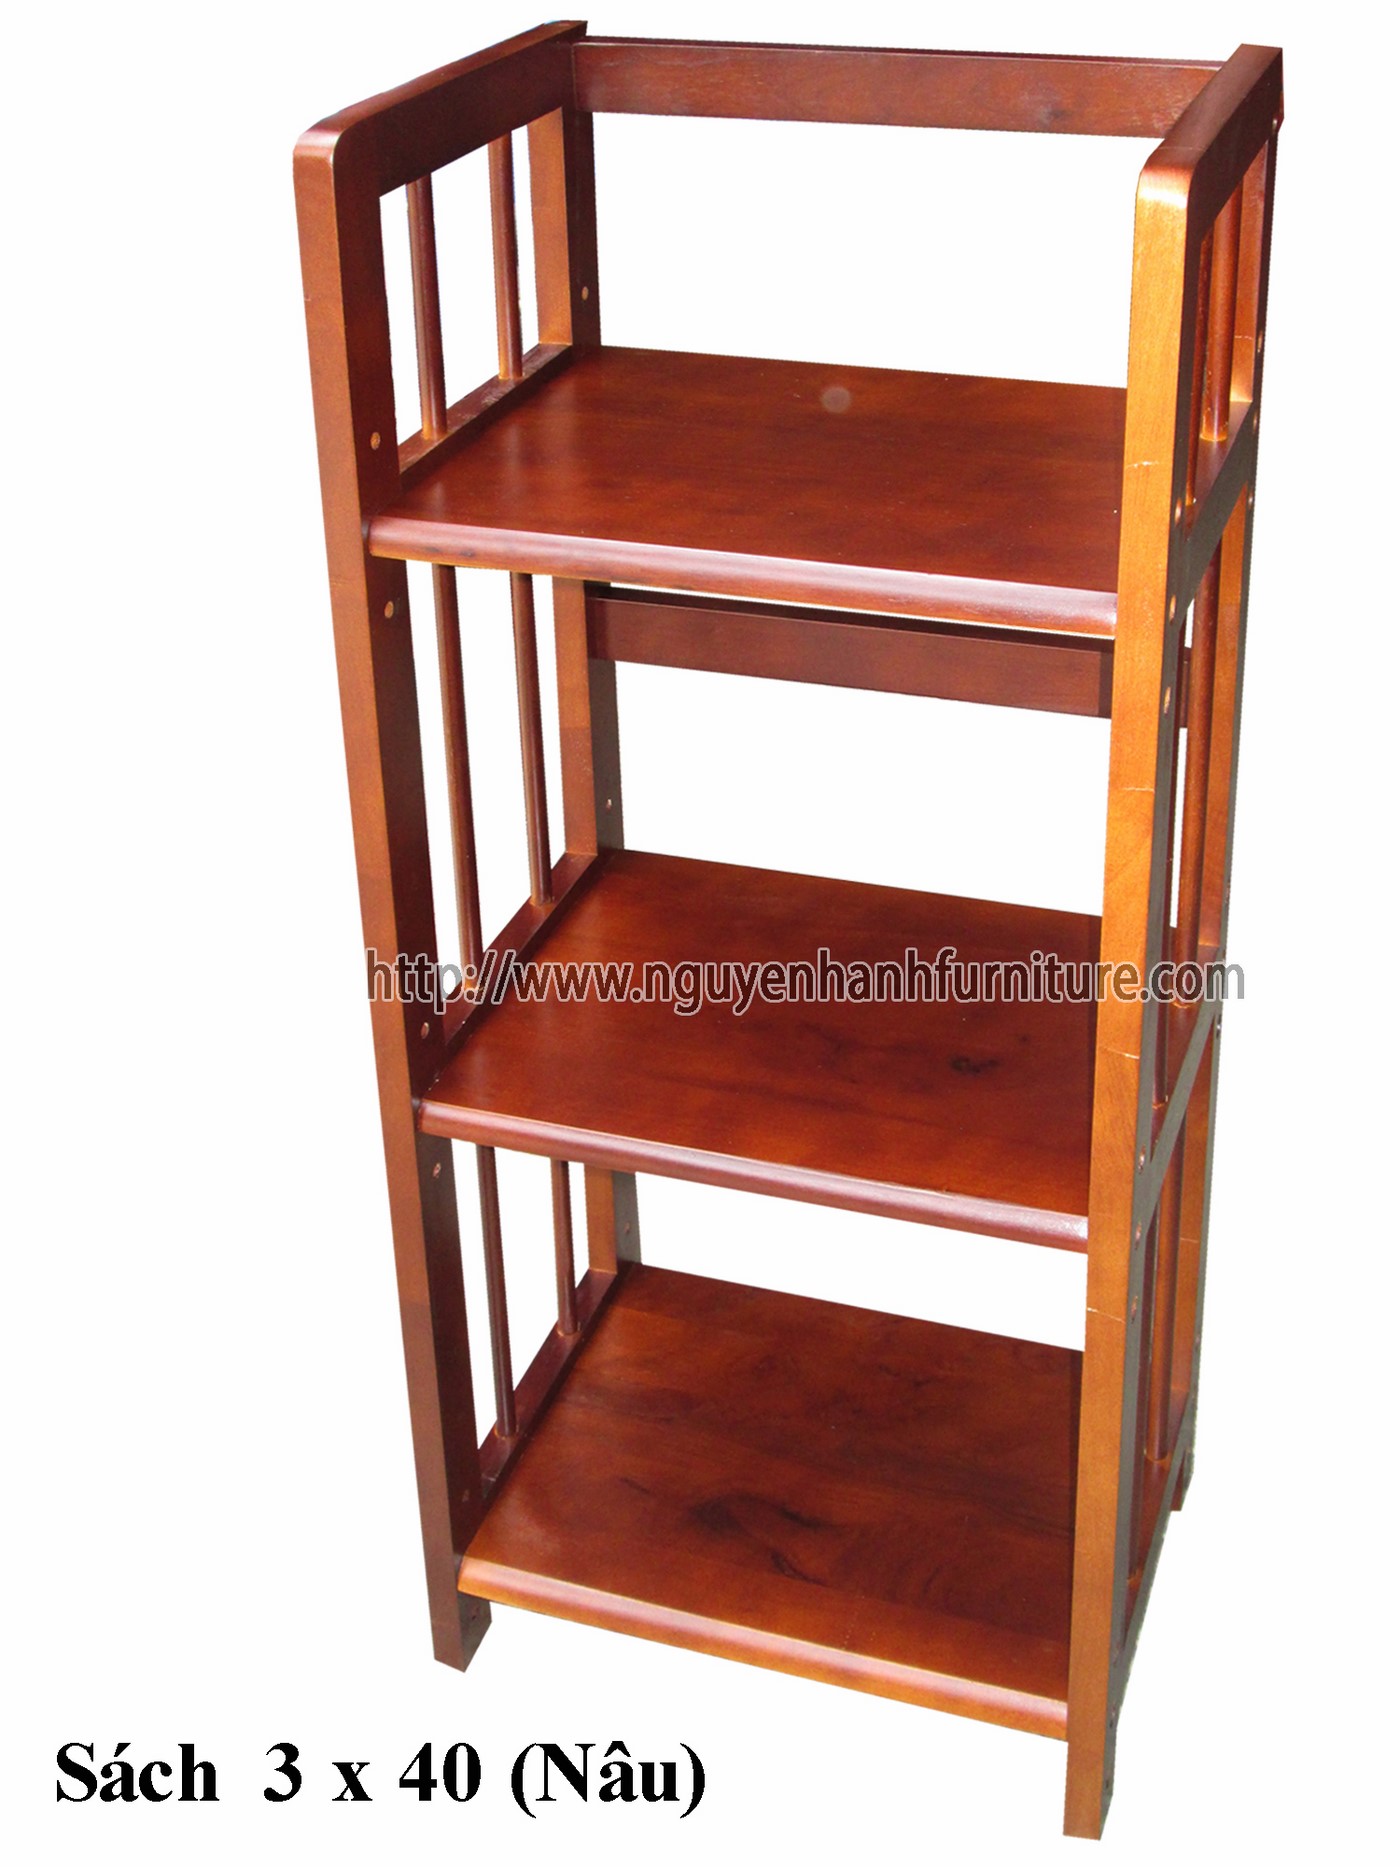 Name product: Triple storey Adjustable Bookshelf 40 (Brown) -  Dimensions: 40 x 28 x 90 (H) - Description: Wood natural rubber